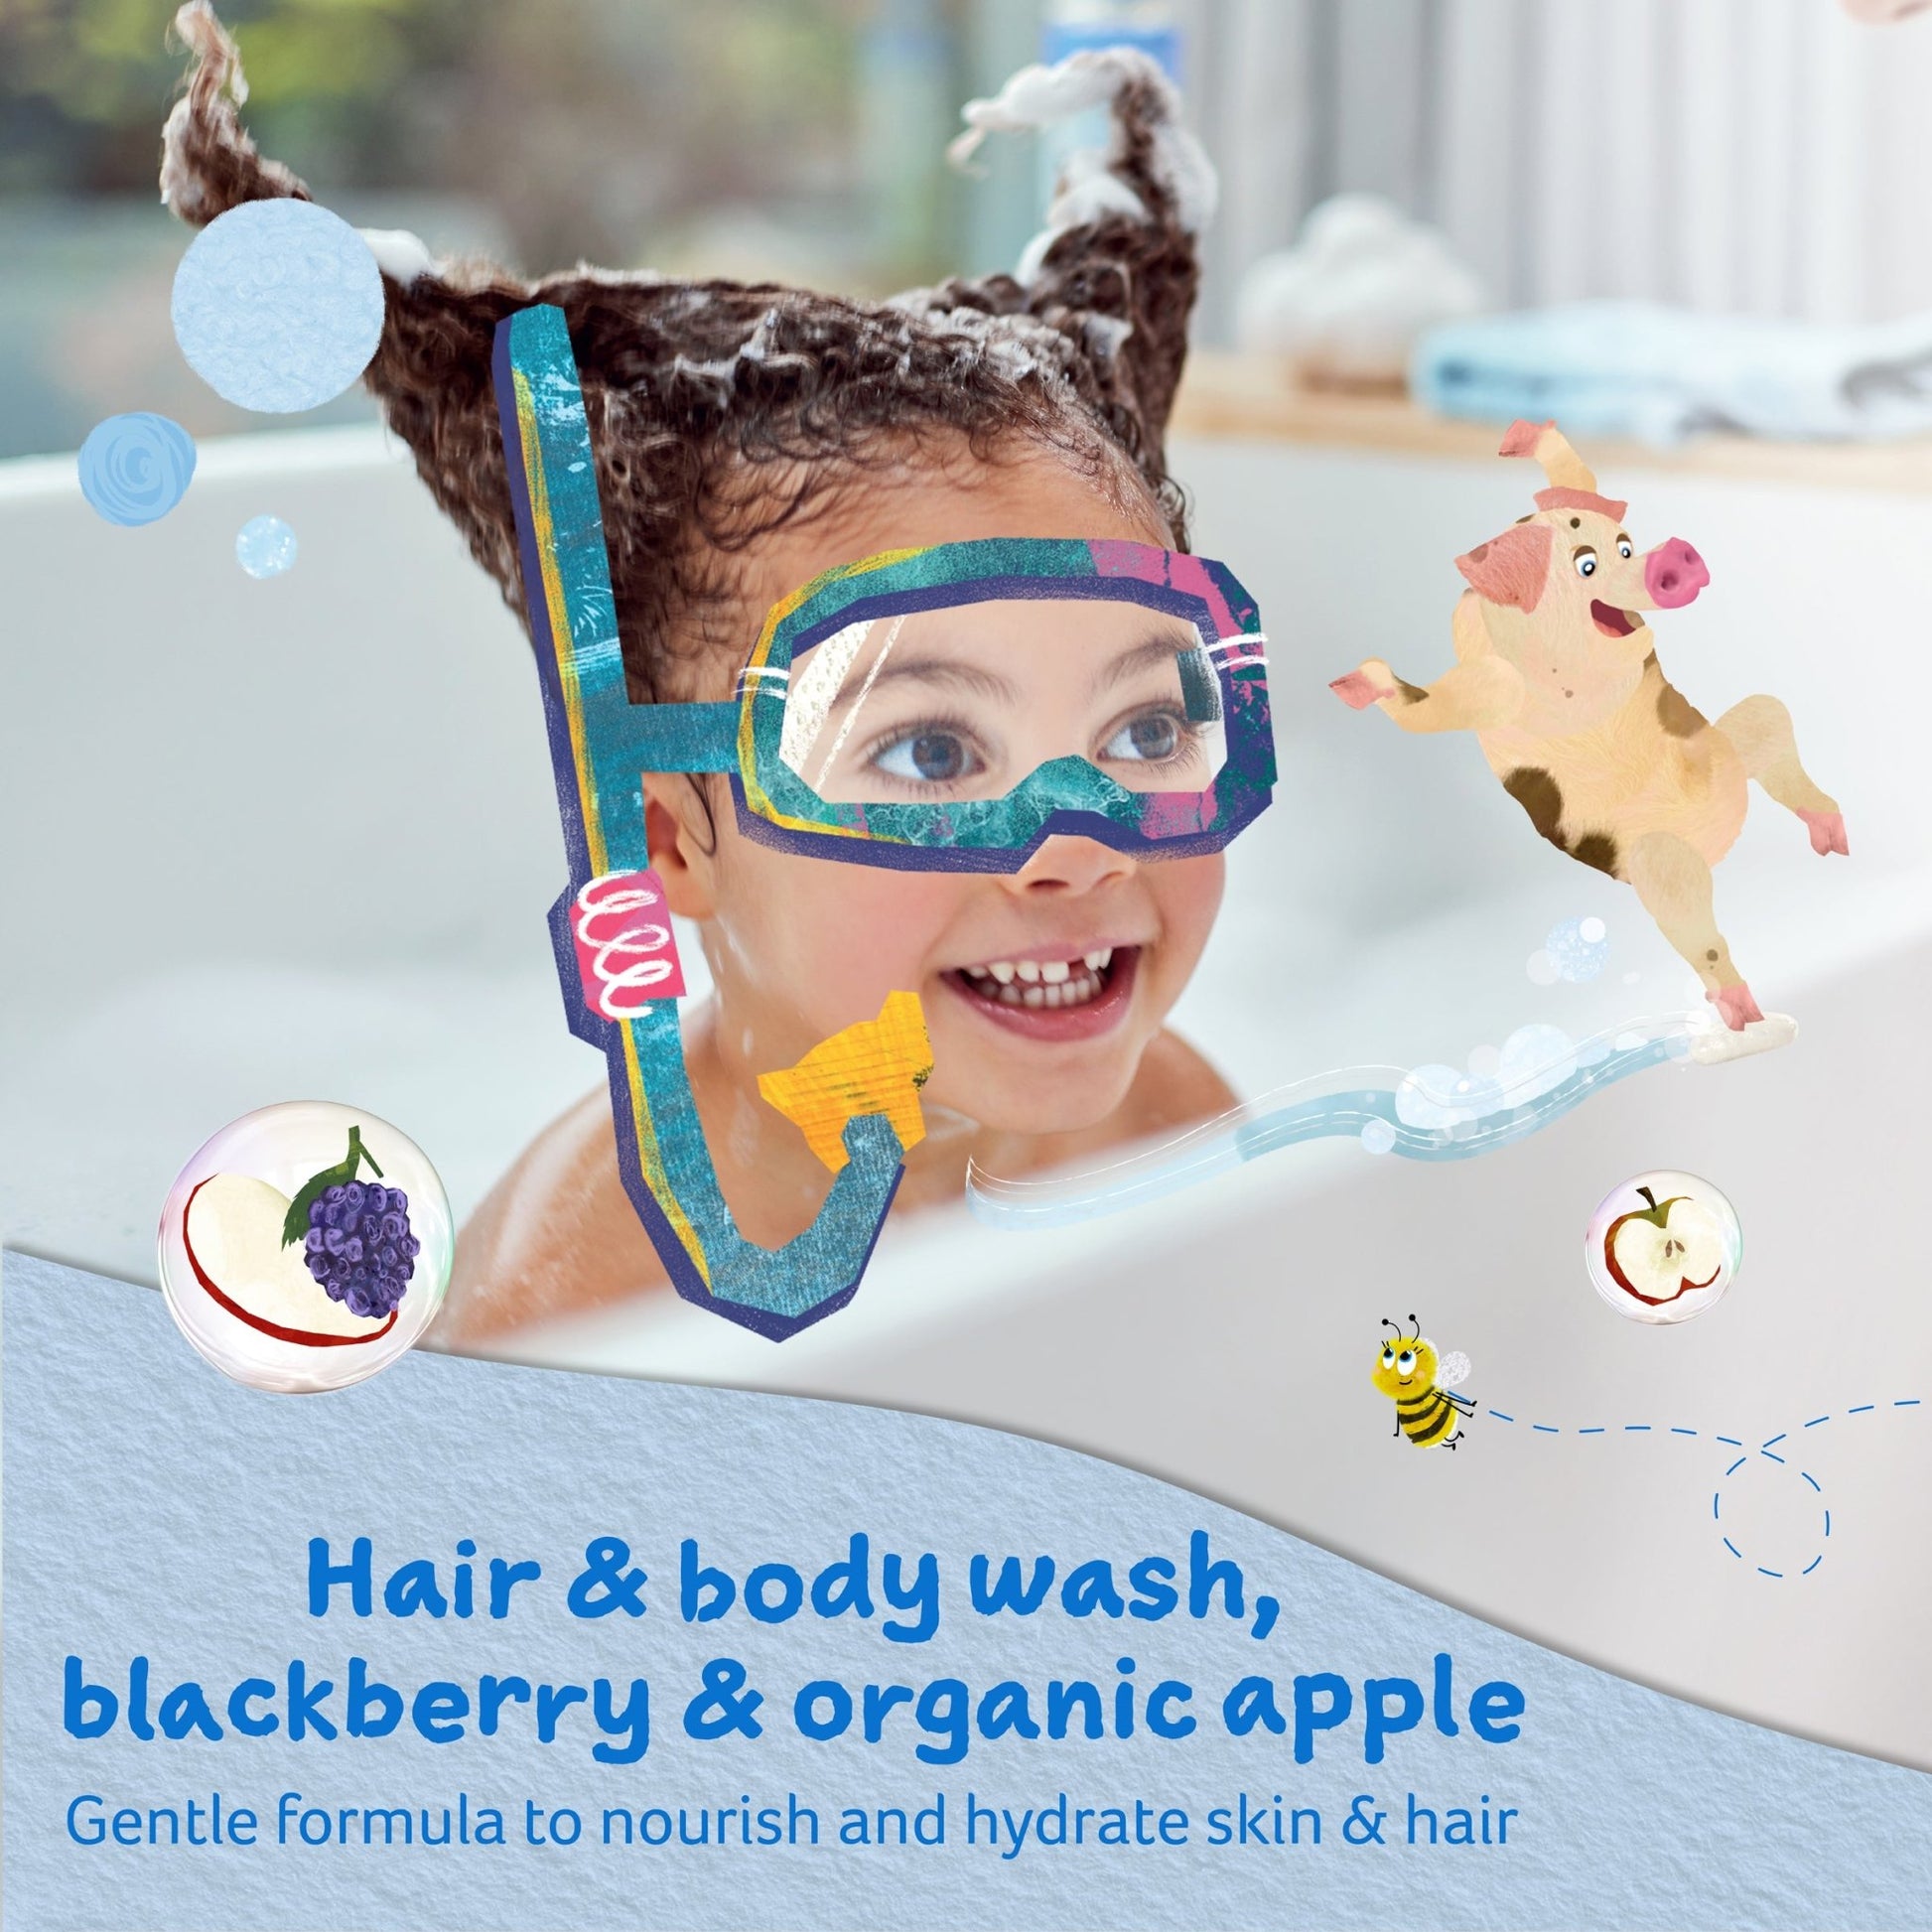 Childs Farm hair & body wash blackberry & organic apple